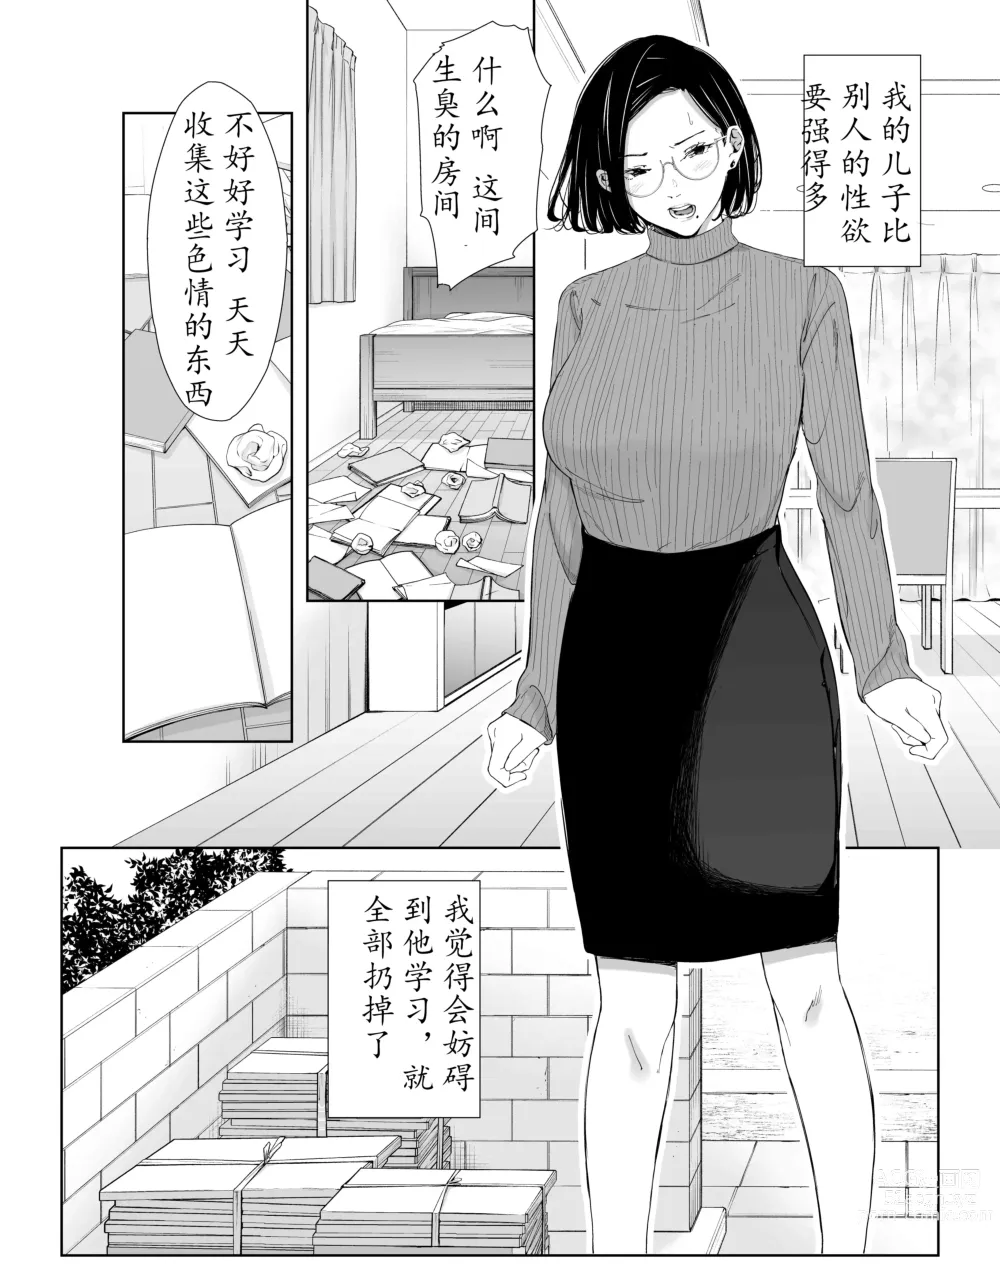 Page 2 of doujinshi 用妈妈来忍一下吧